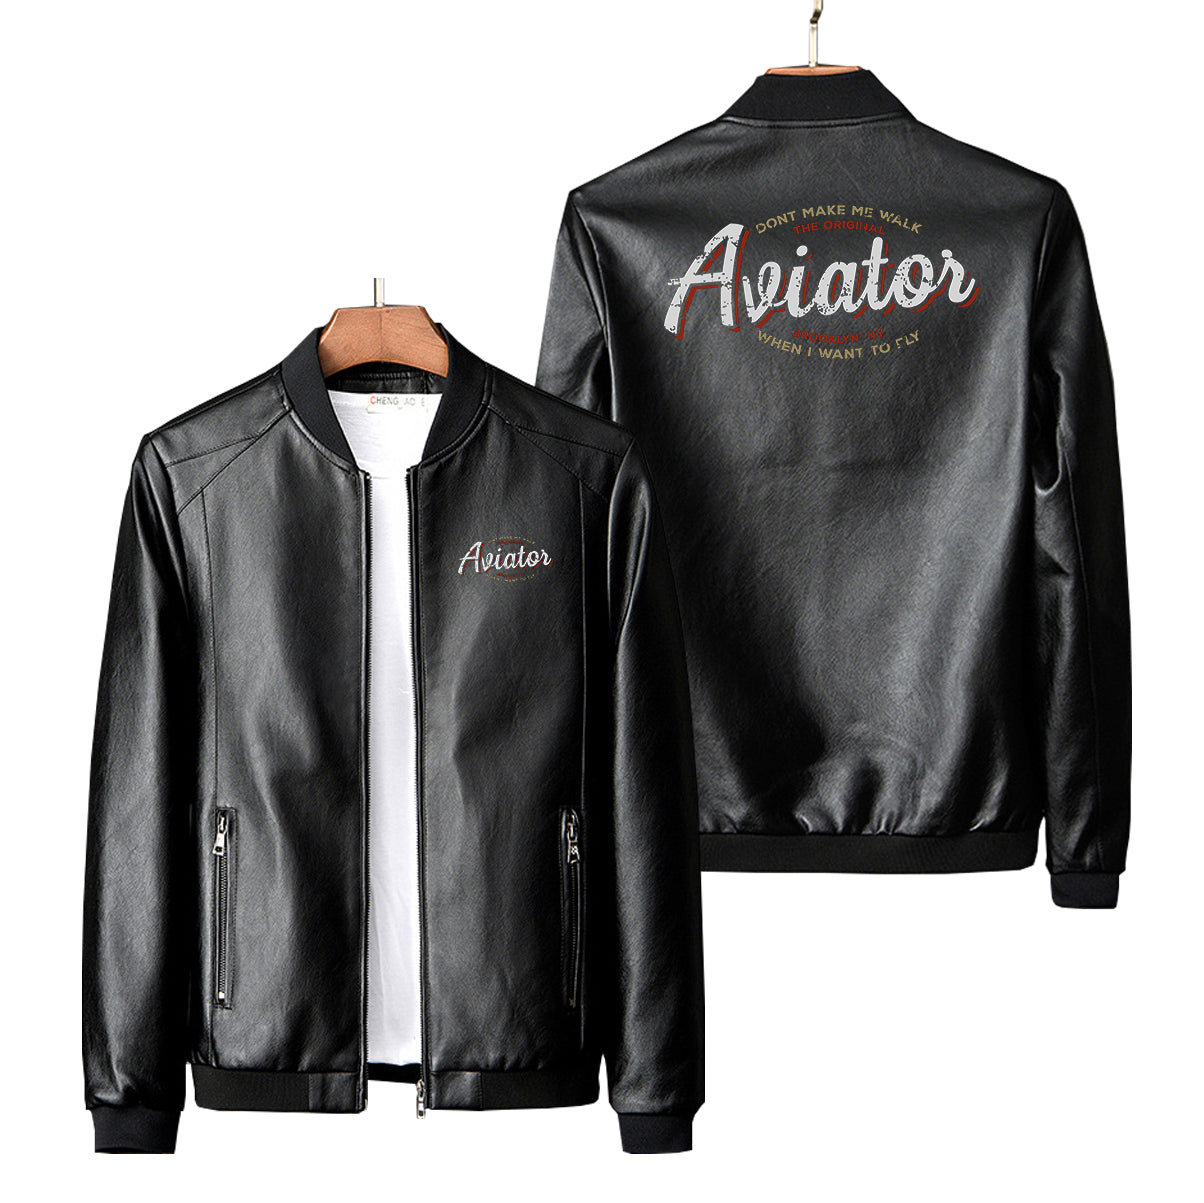 Aviator - Dont Make Me Walk Designed PU Leather Jackets